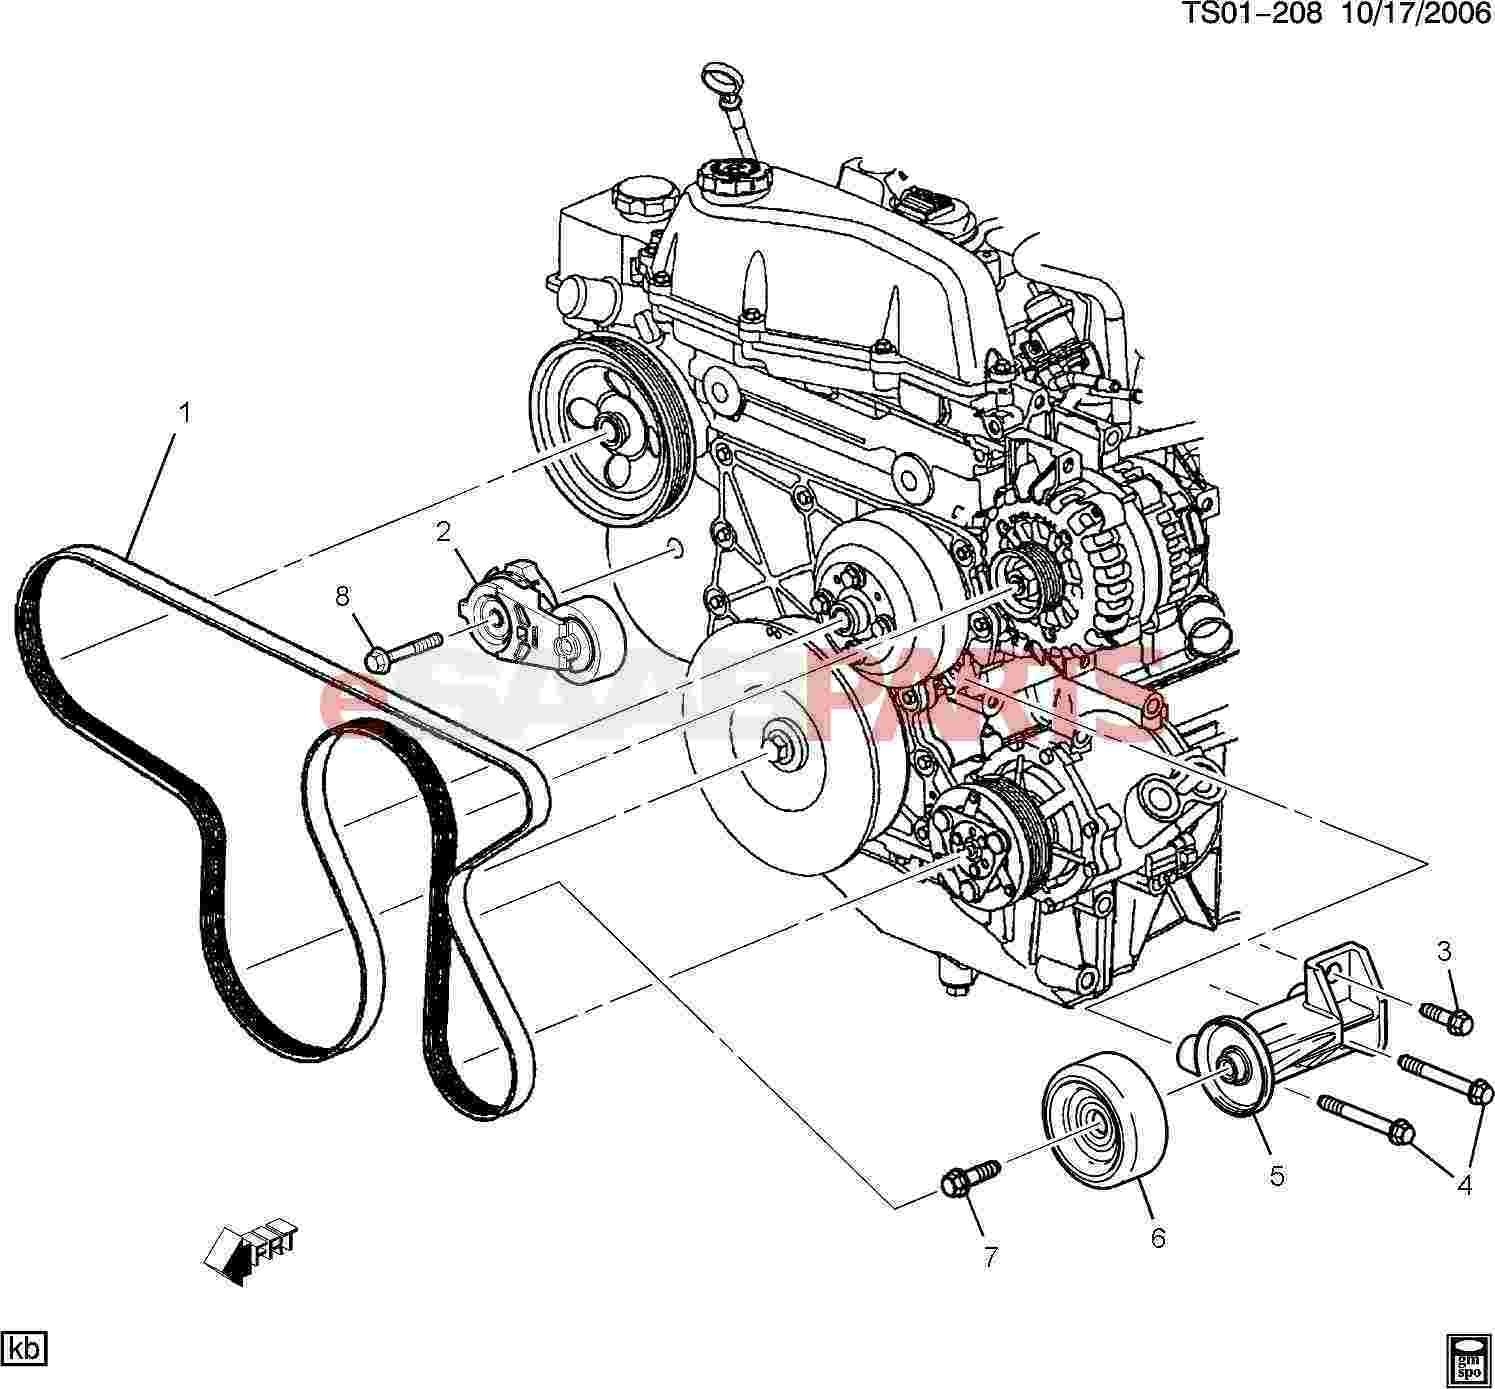 Chevy 3 1 Engine Diagram 2000 Chevy Blazer Engine Diagram ] Saab Bolt Hfh M10x1 535 32thd 22 Of Chevy 3 1 Engine Diagram